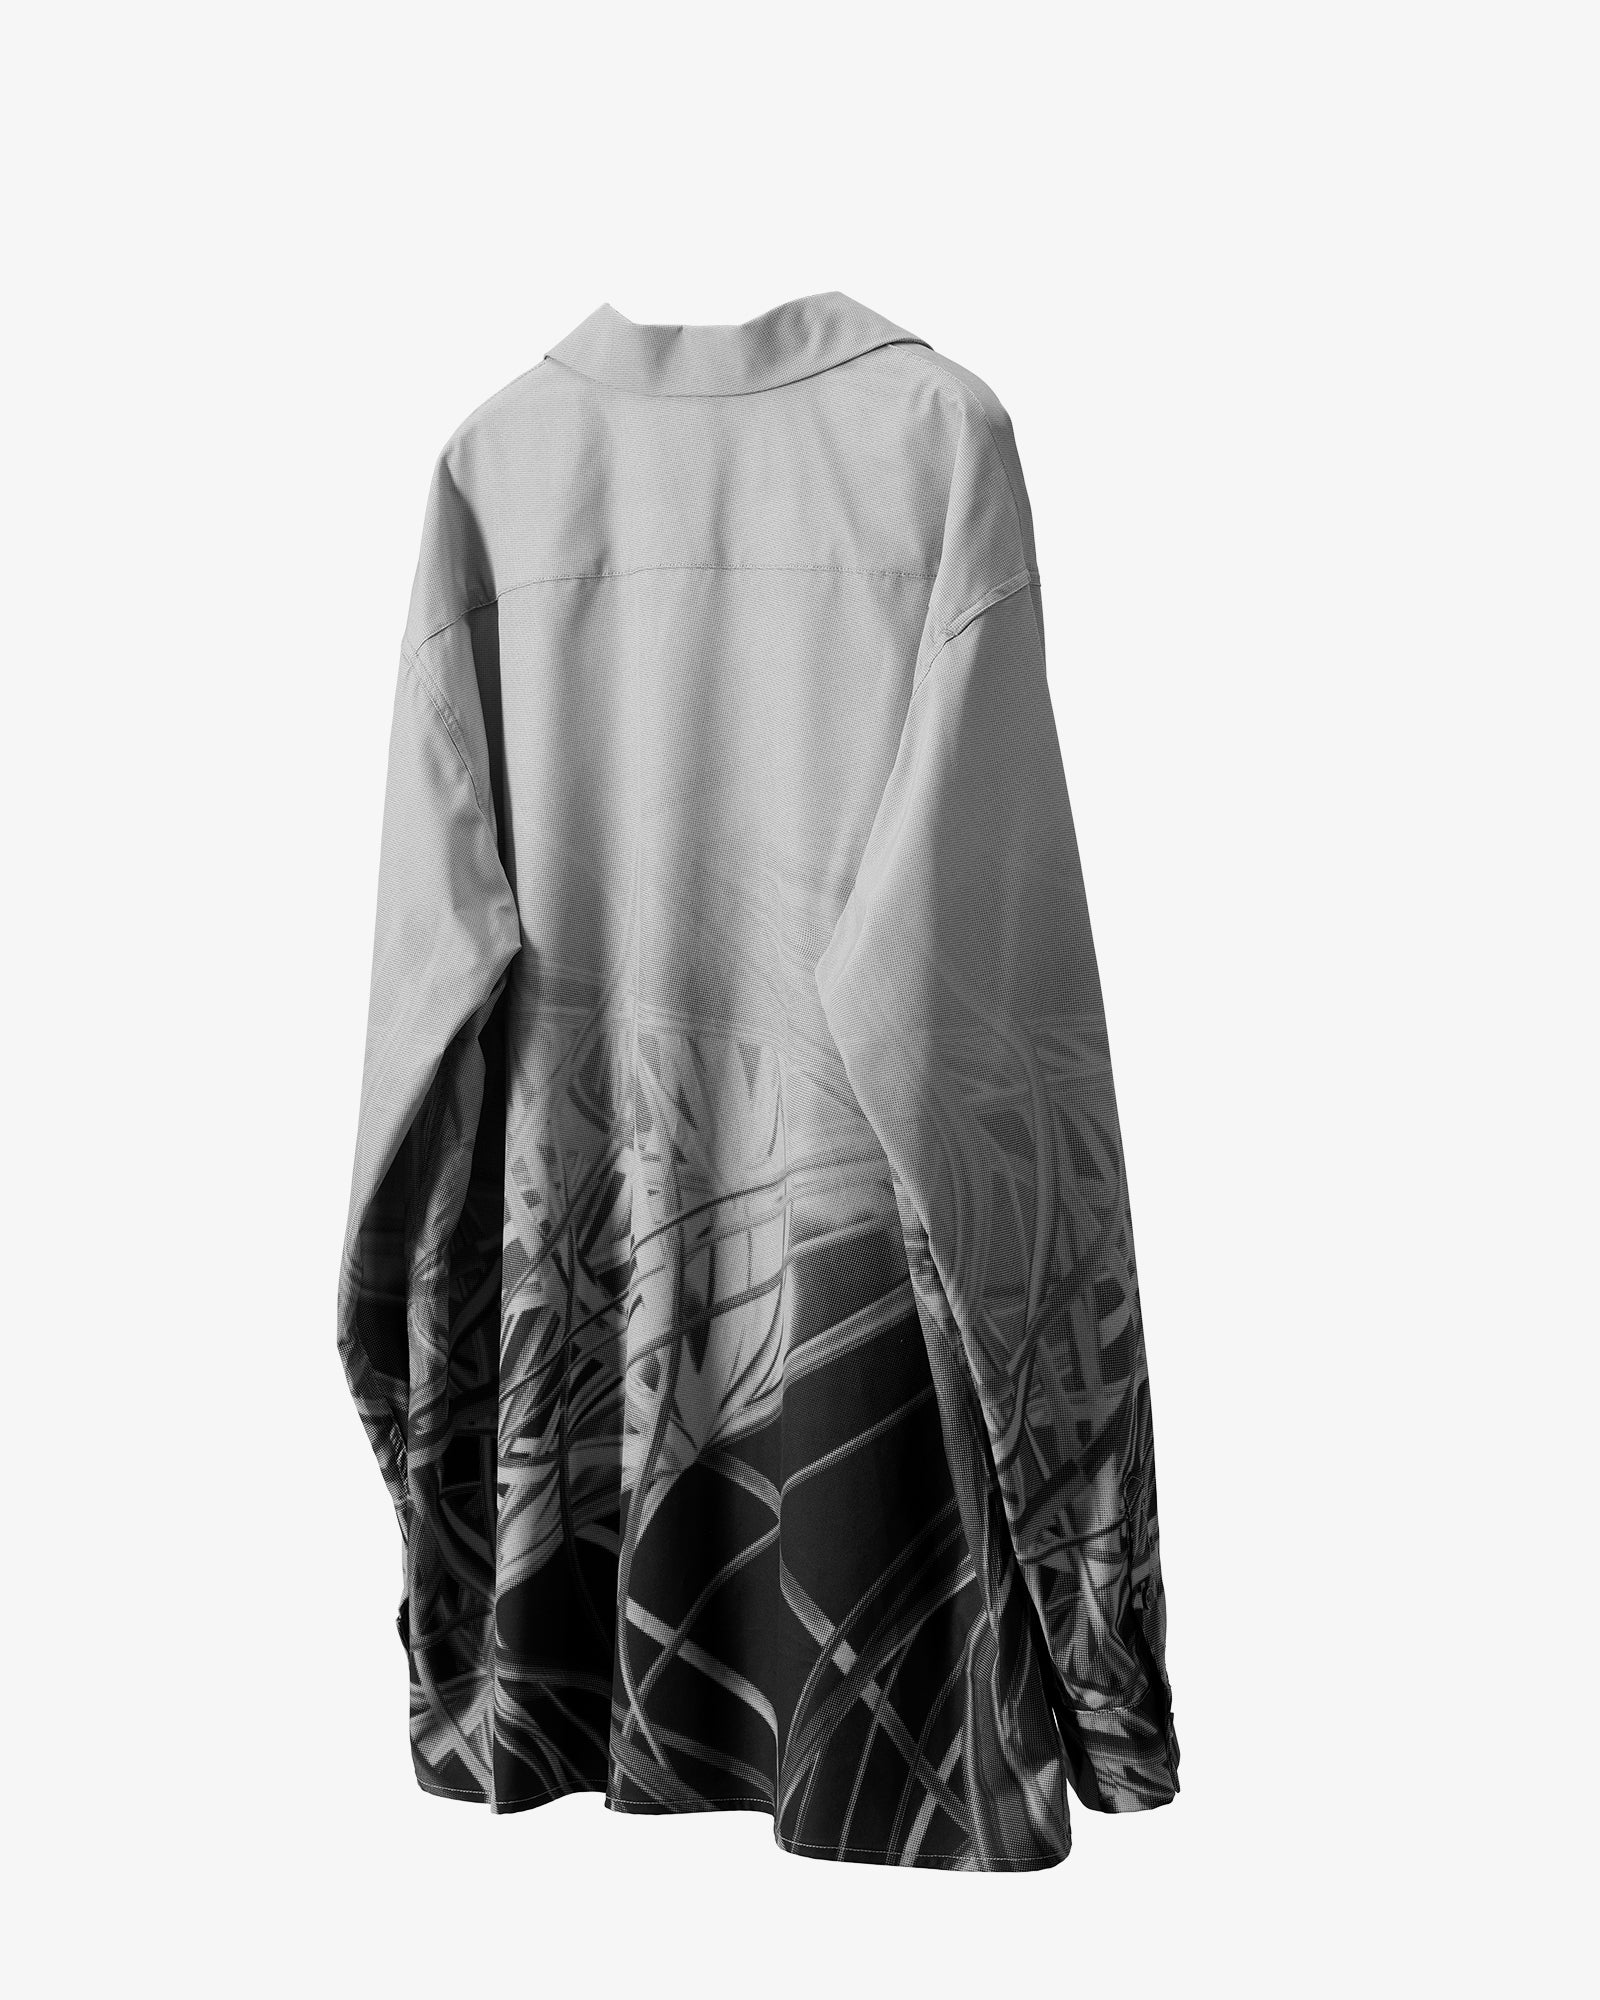 Abstract Print Gradient Shirt Grey